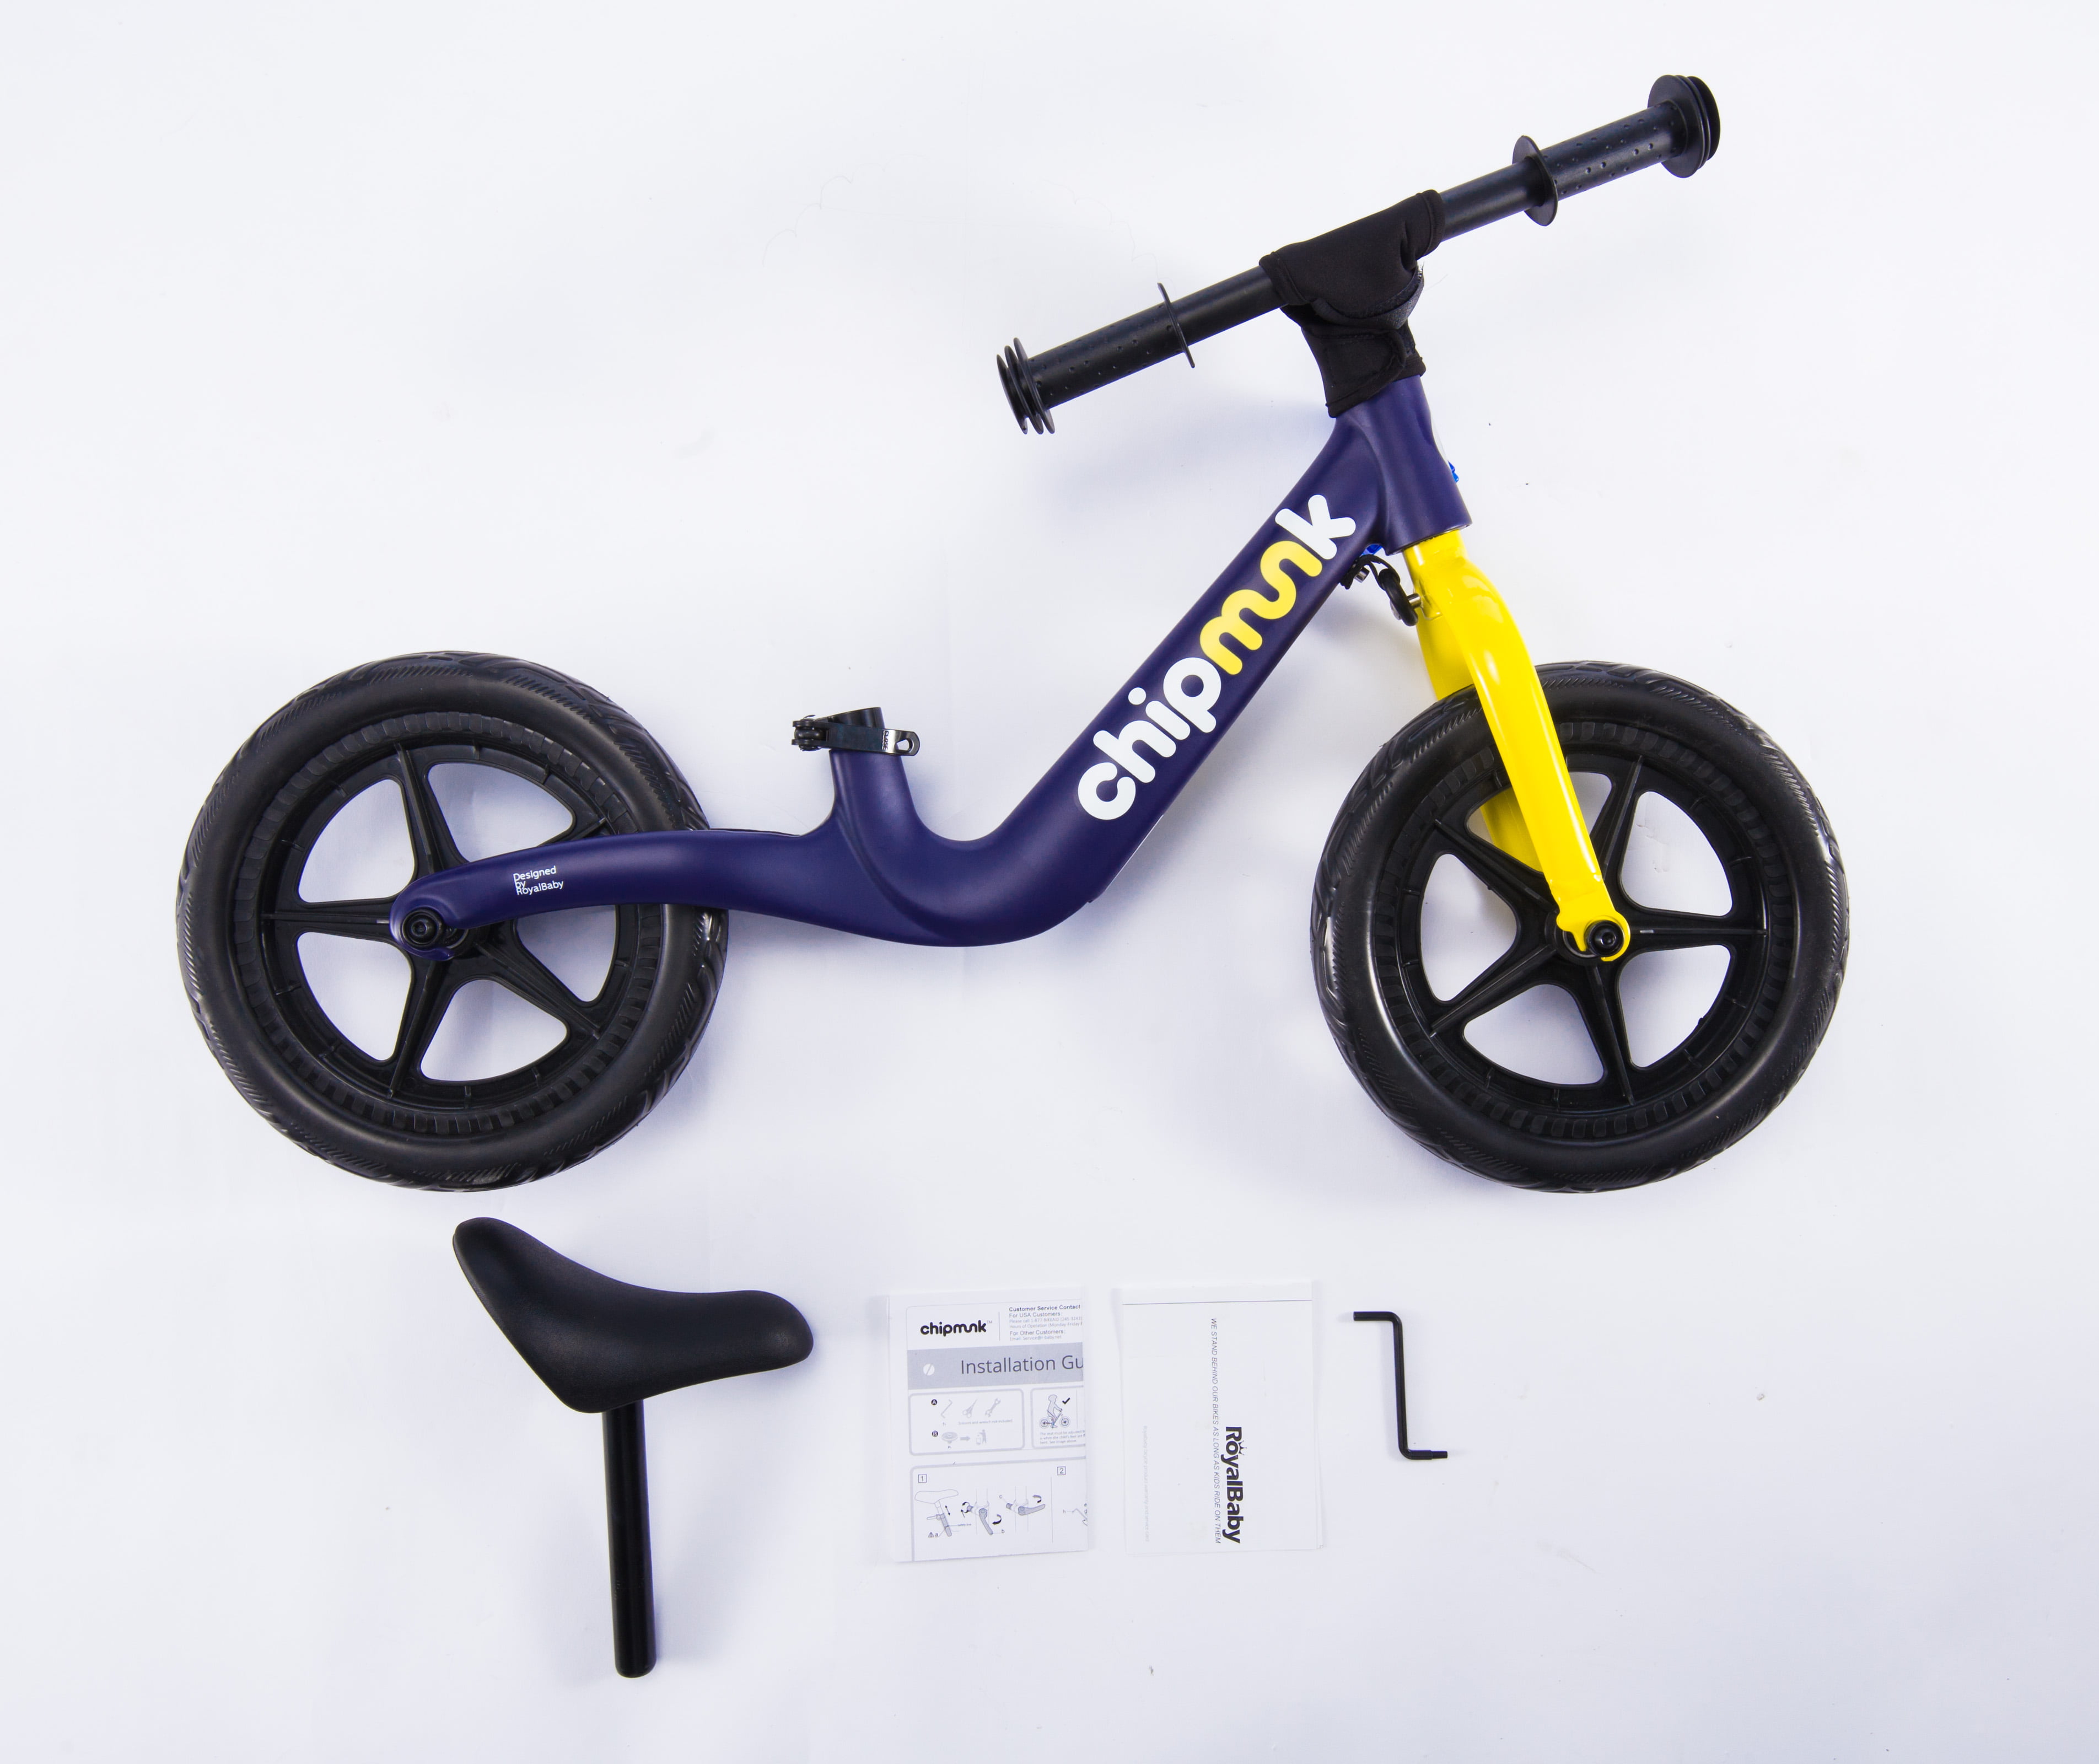 RoyalBaby Chipmunk Magnesium Frame Balance Bike 12 Sport Black Available in Blue 2-5 yrs Orange Red Light Weight